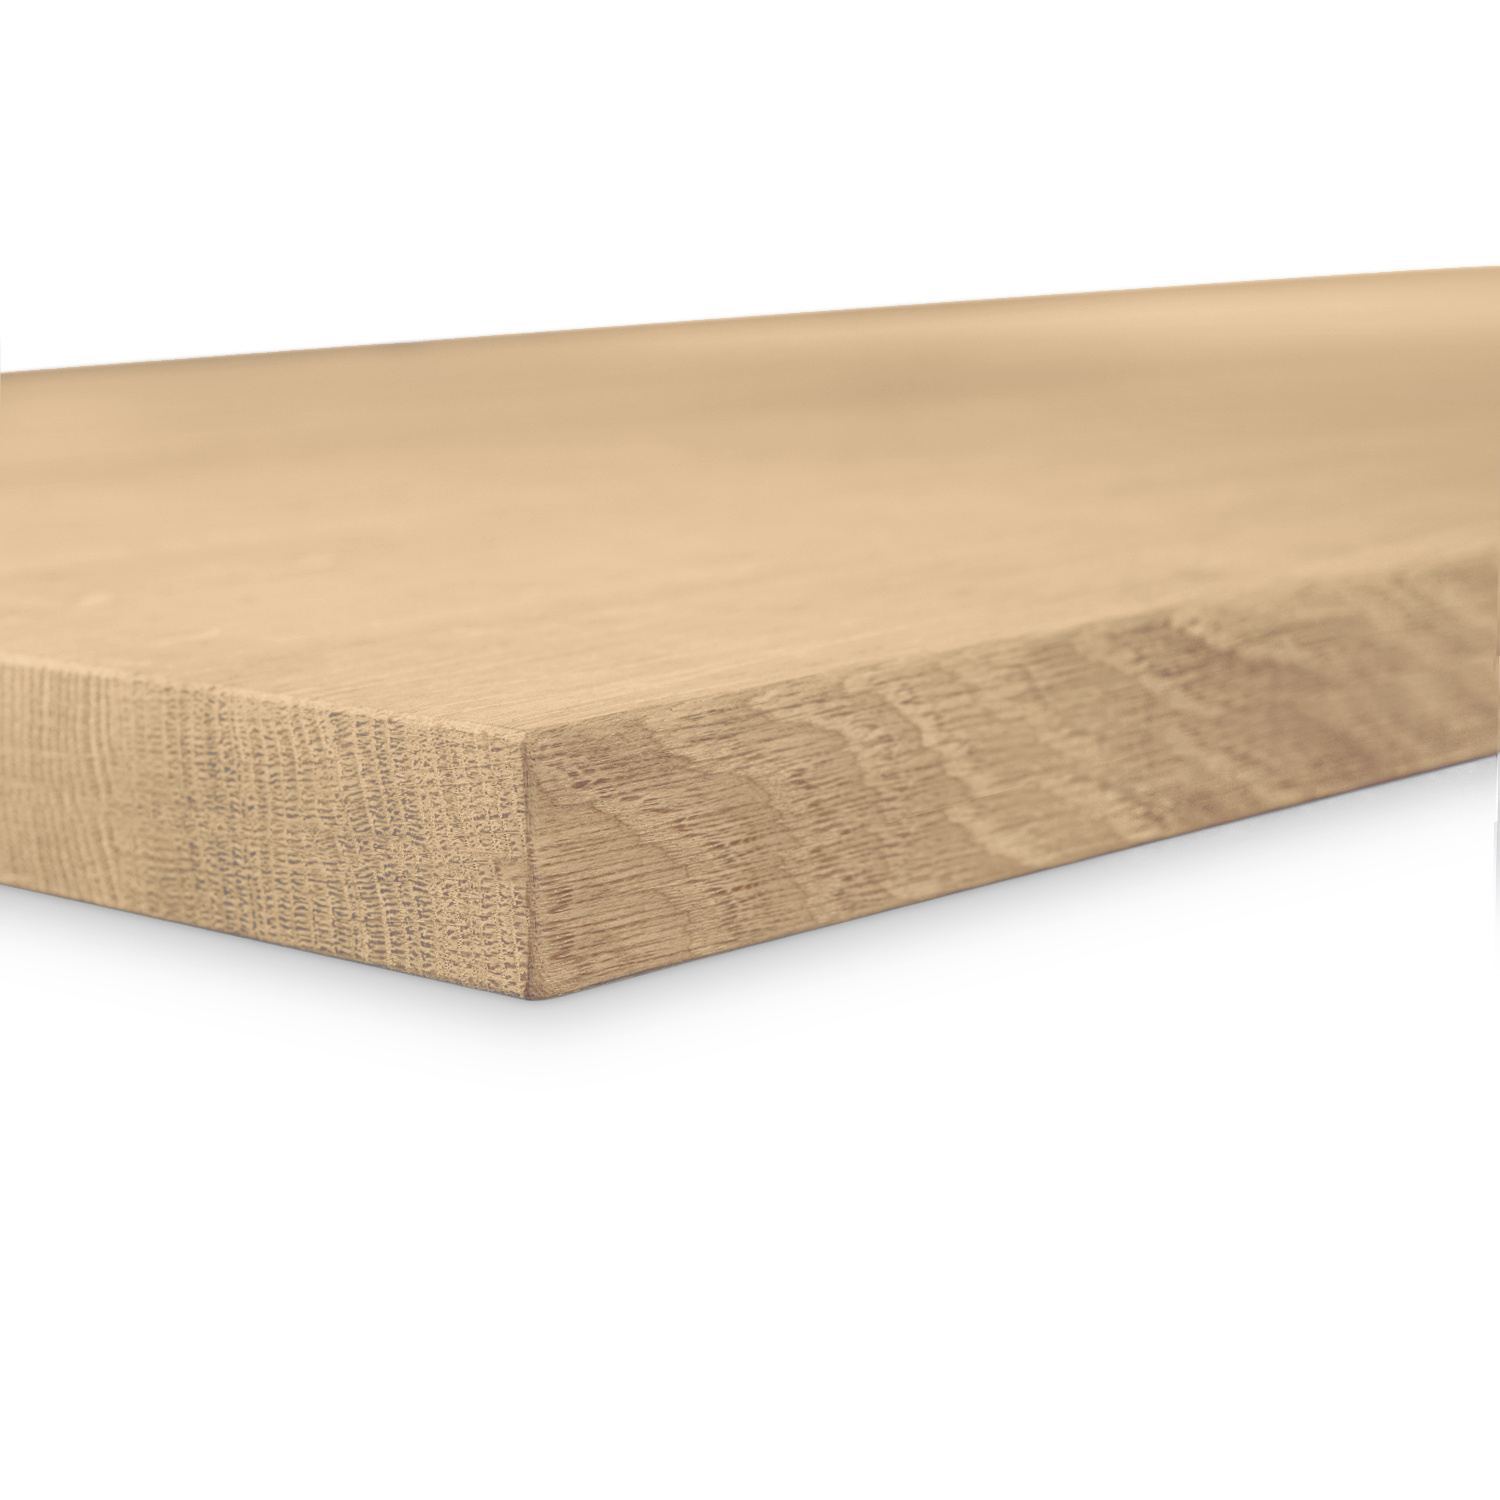  Eiken tafelblad op maat - 4 cm dik (1-laag) - foutvrij Europees eikenhout - verlijmd kd 8-12% - 50-120x50-350 cm